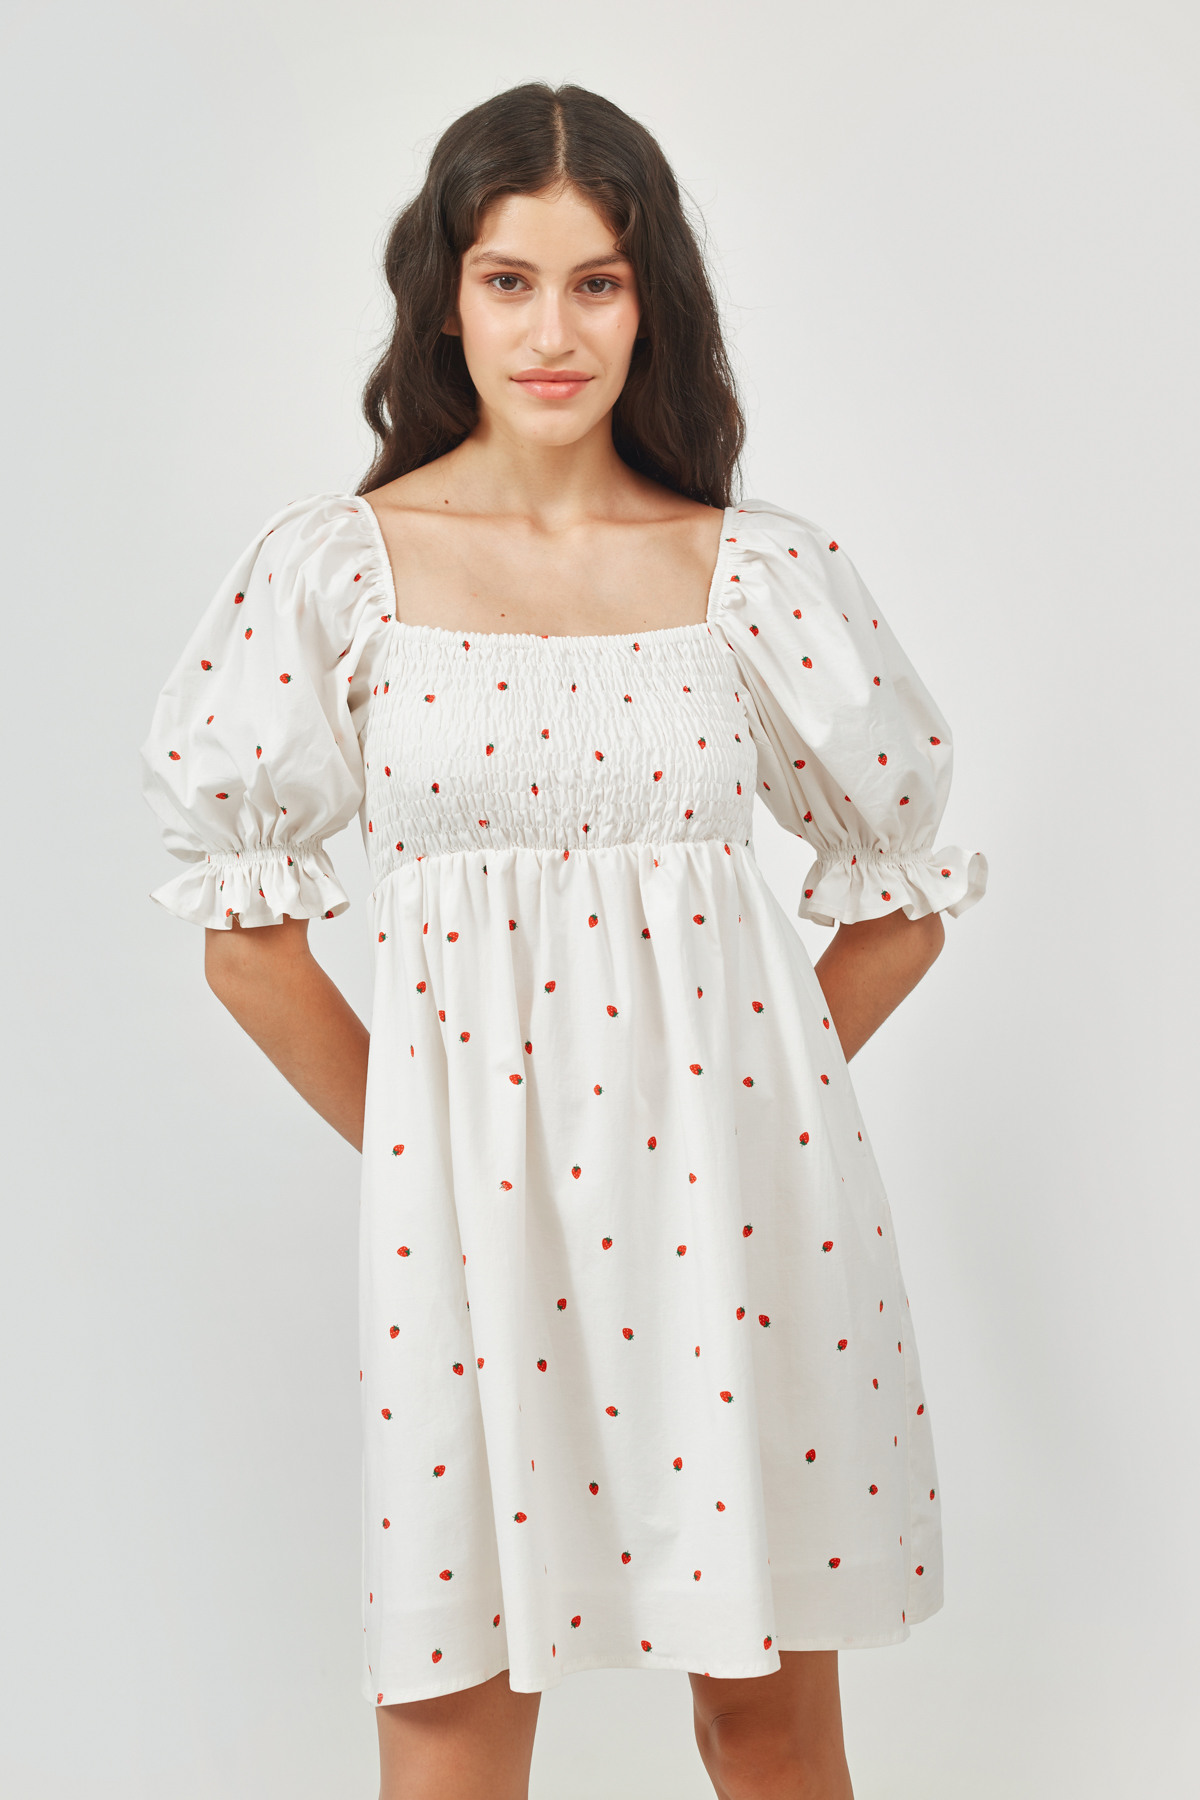 Short dress in strawberry print, photo 1